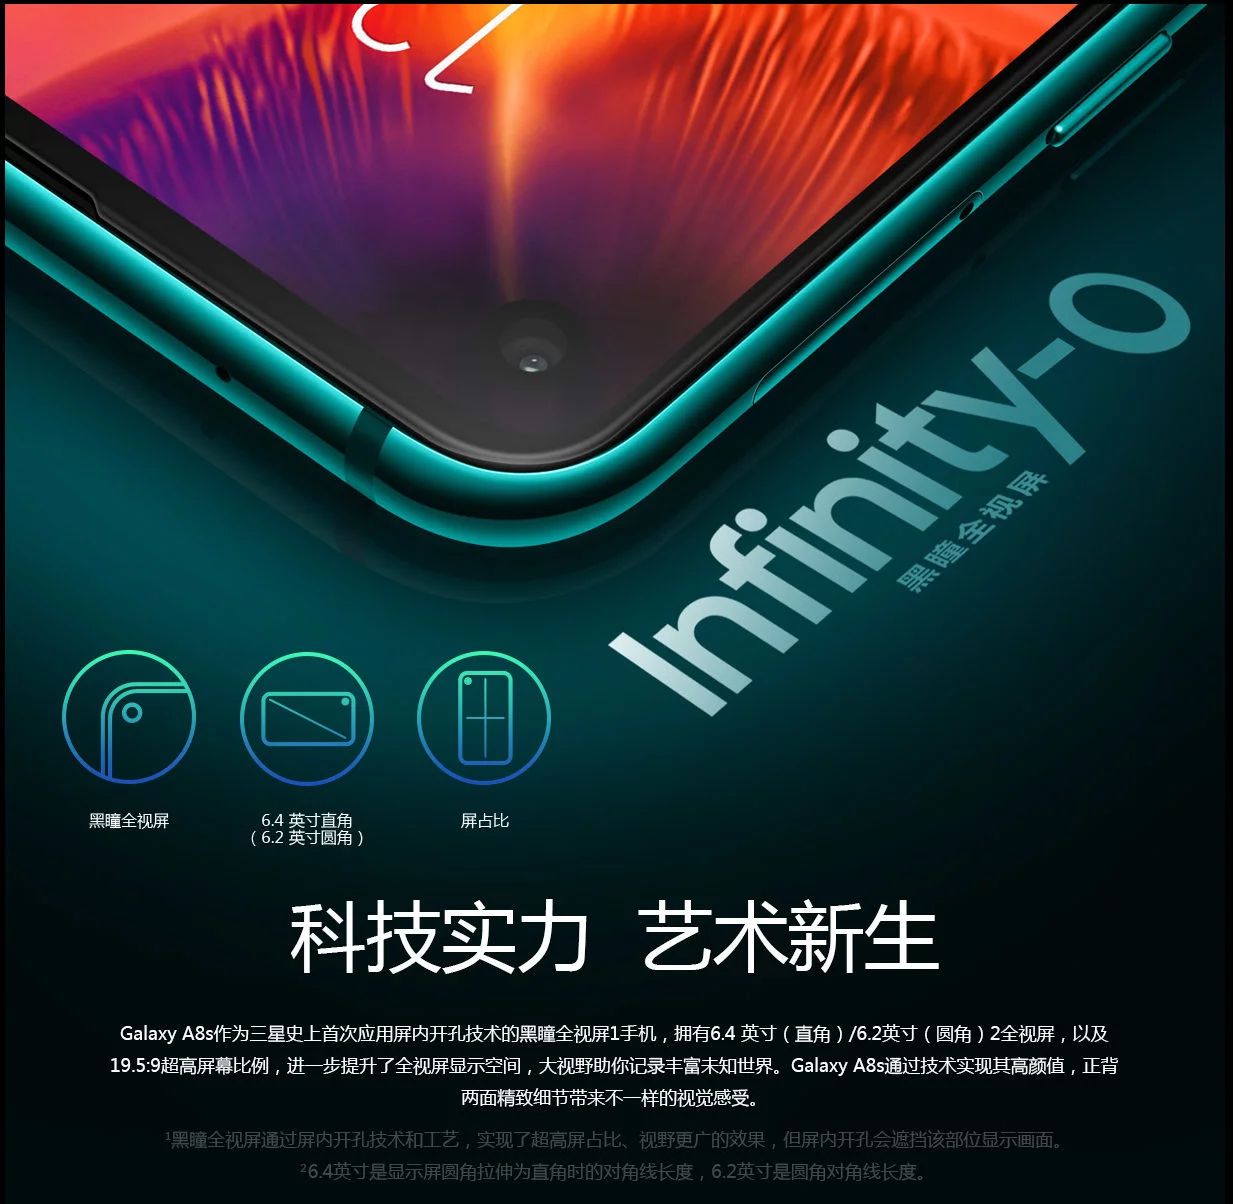 Infinity-O ekranlı ilk telefonla tanışın: Samsung Galaxy A8s resmen tanıtıldı